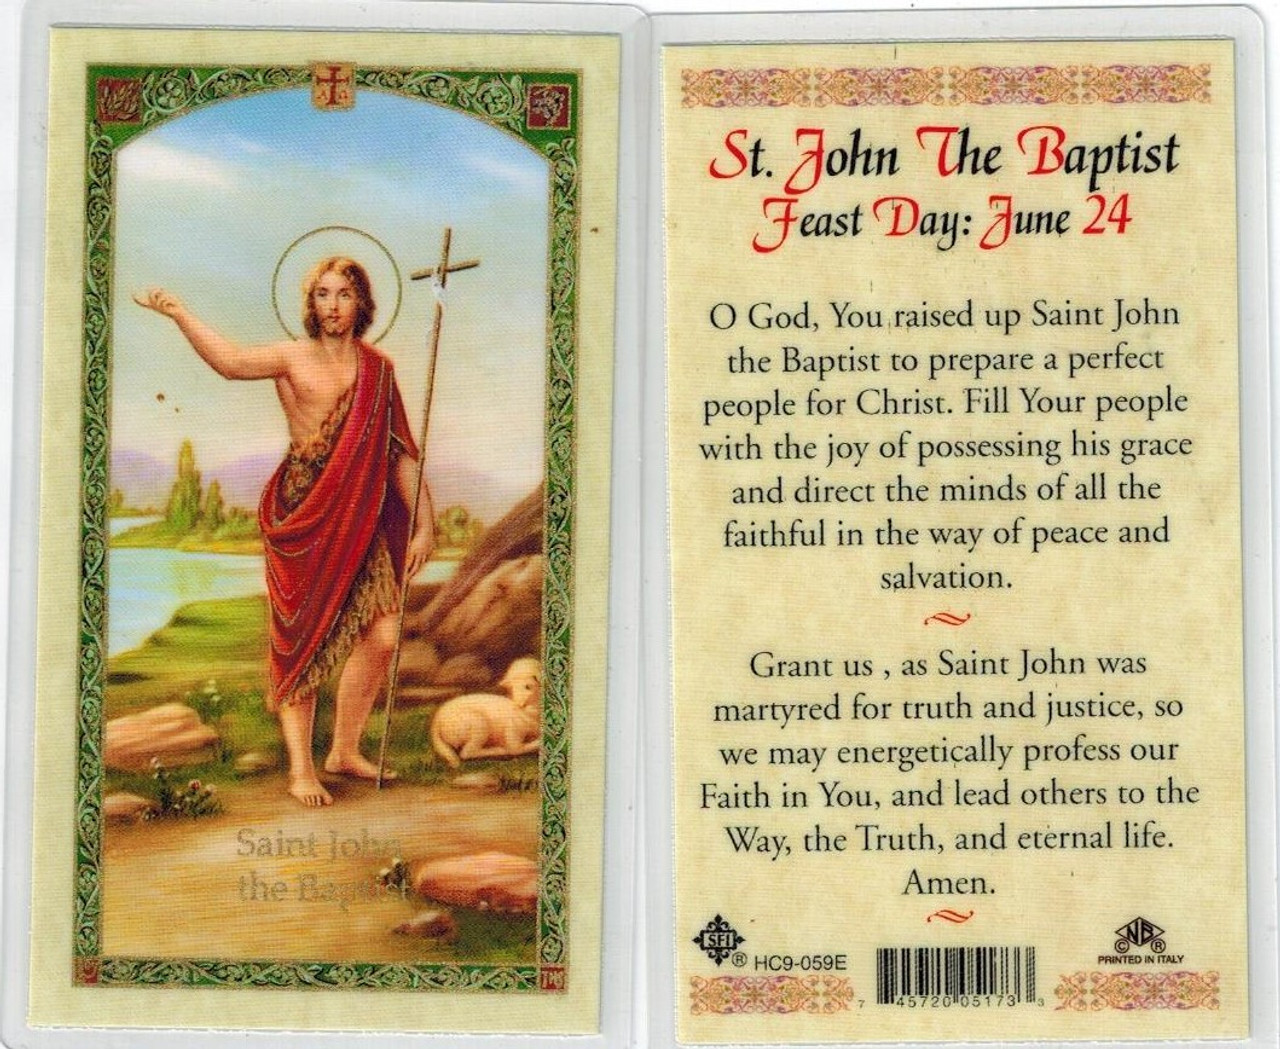 St. John the Baptist, laminated prayer card